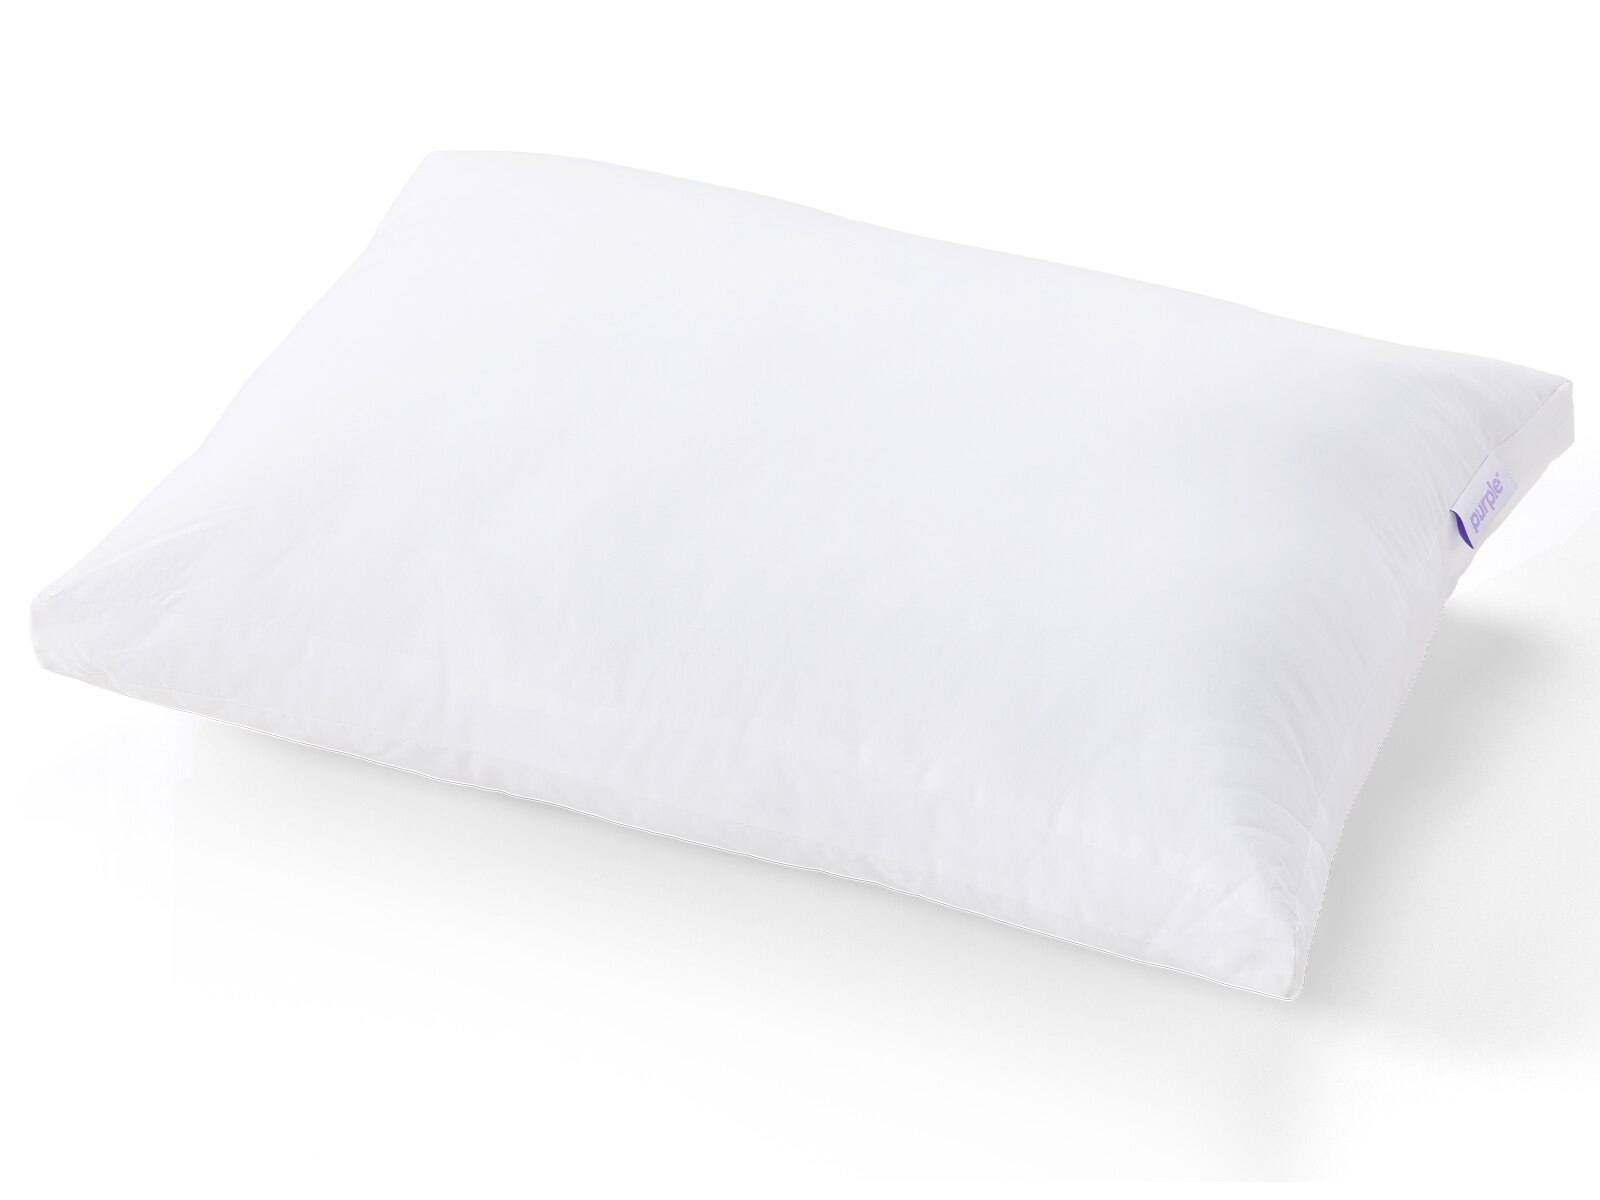 Cloud® Pillow